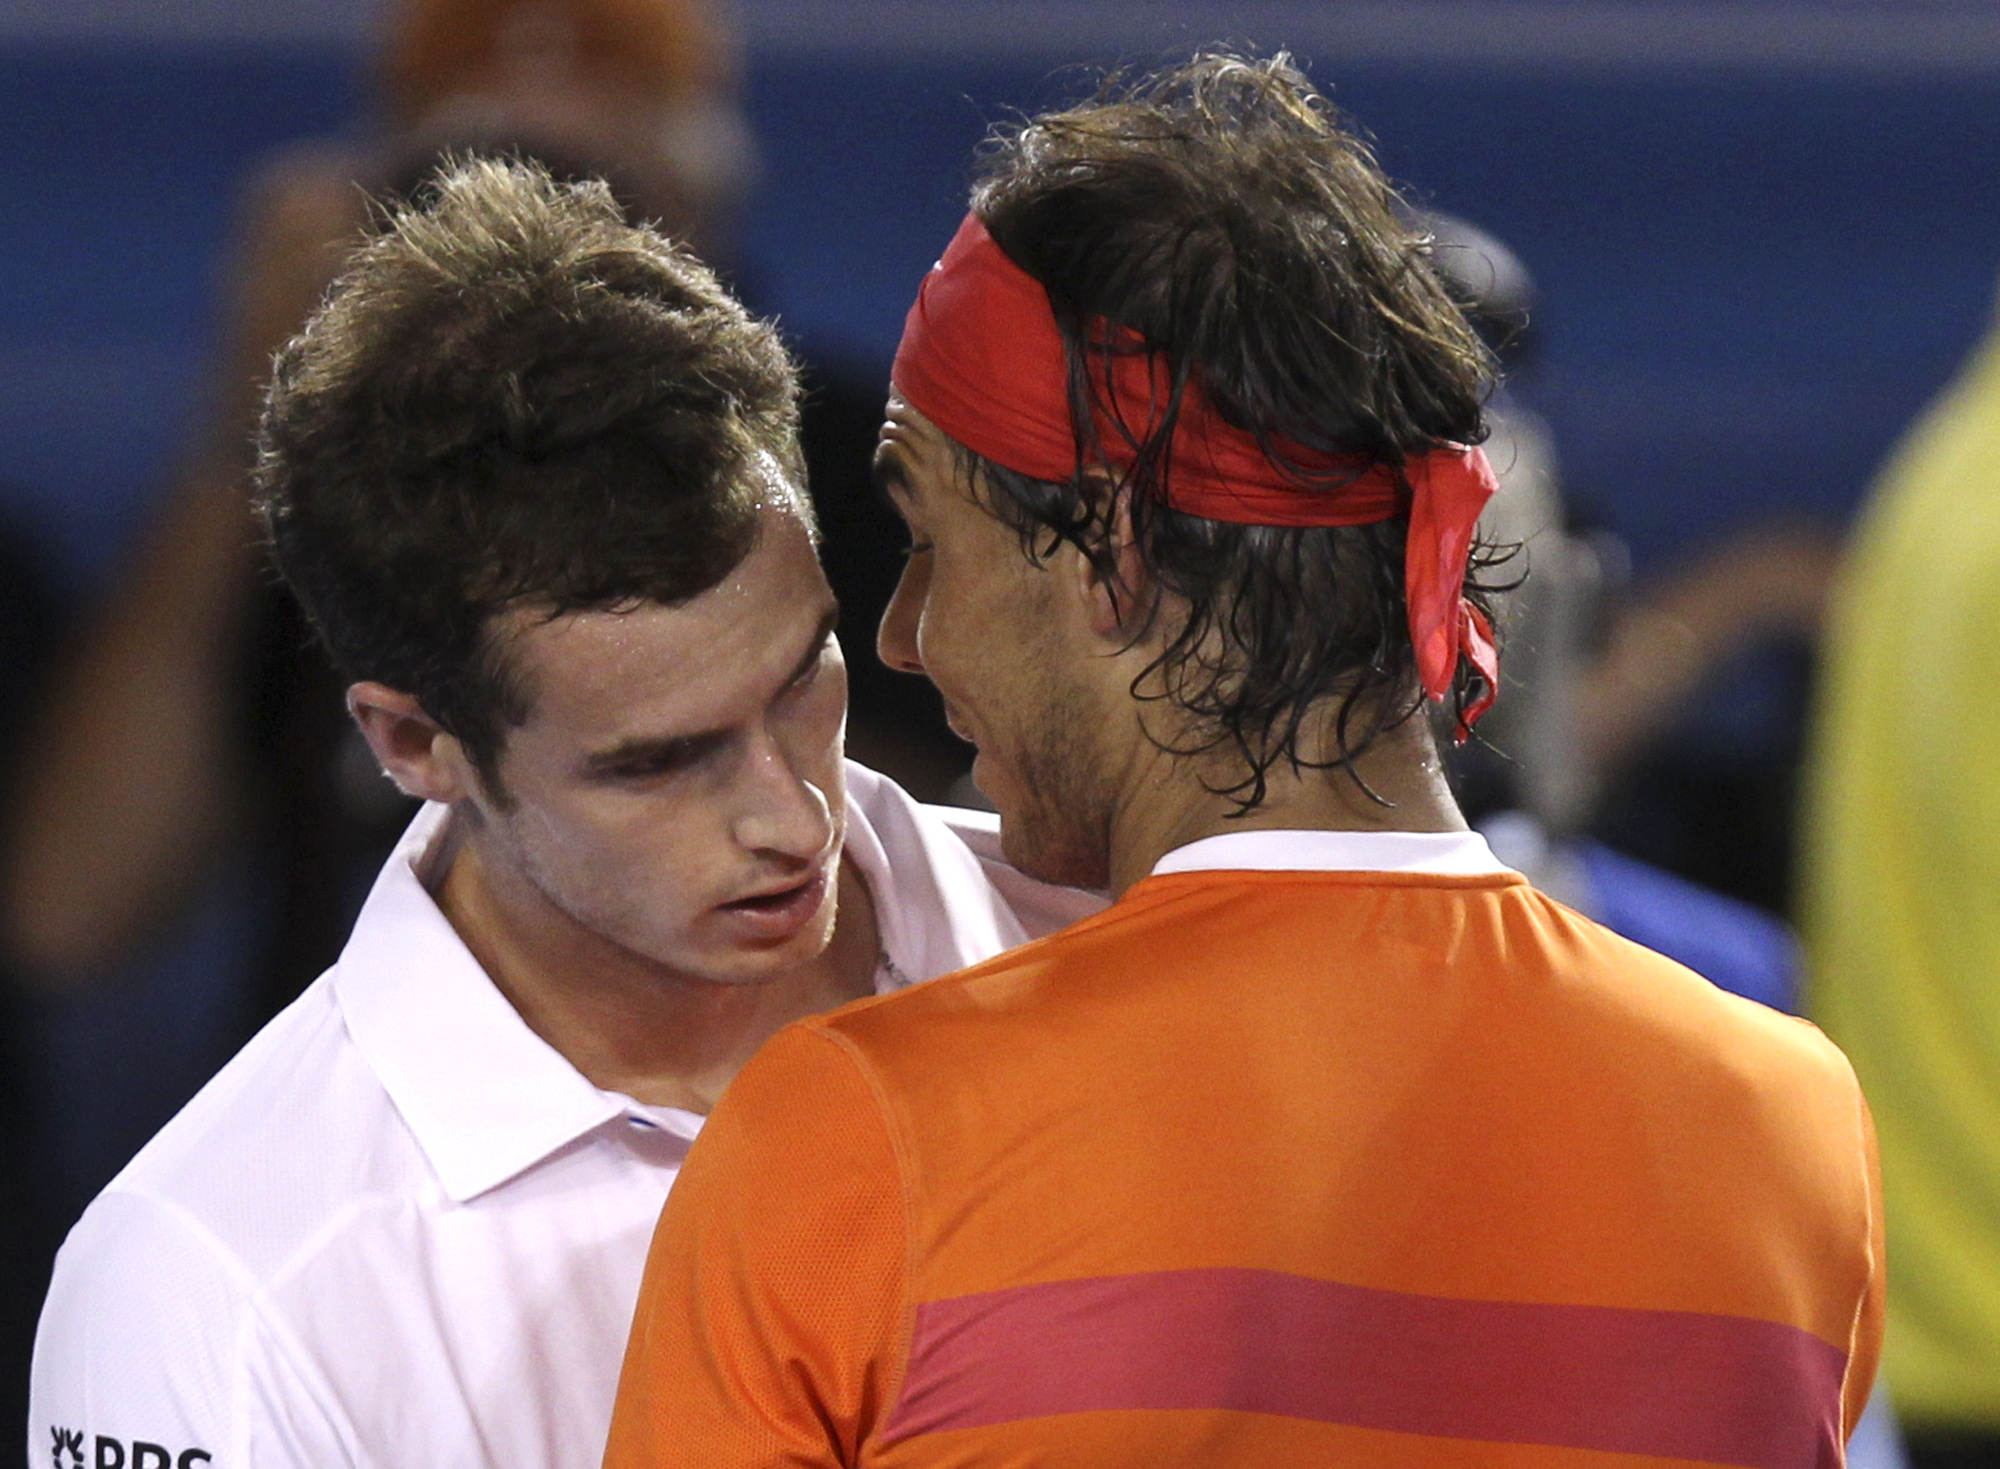 Tennis, Marin Cilic, Rafael Nadal, Andy Roddick, Roger Federer, Australian Open, Andy Murray